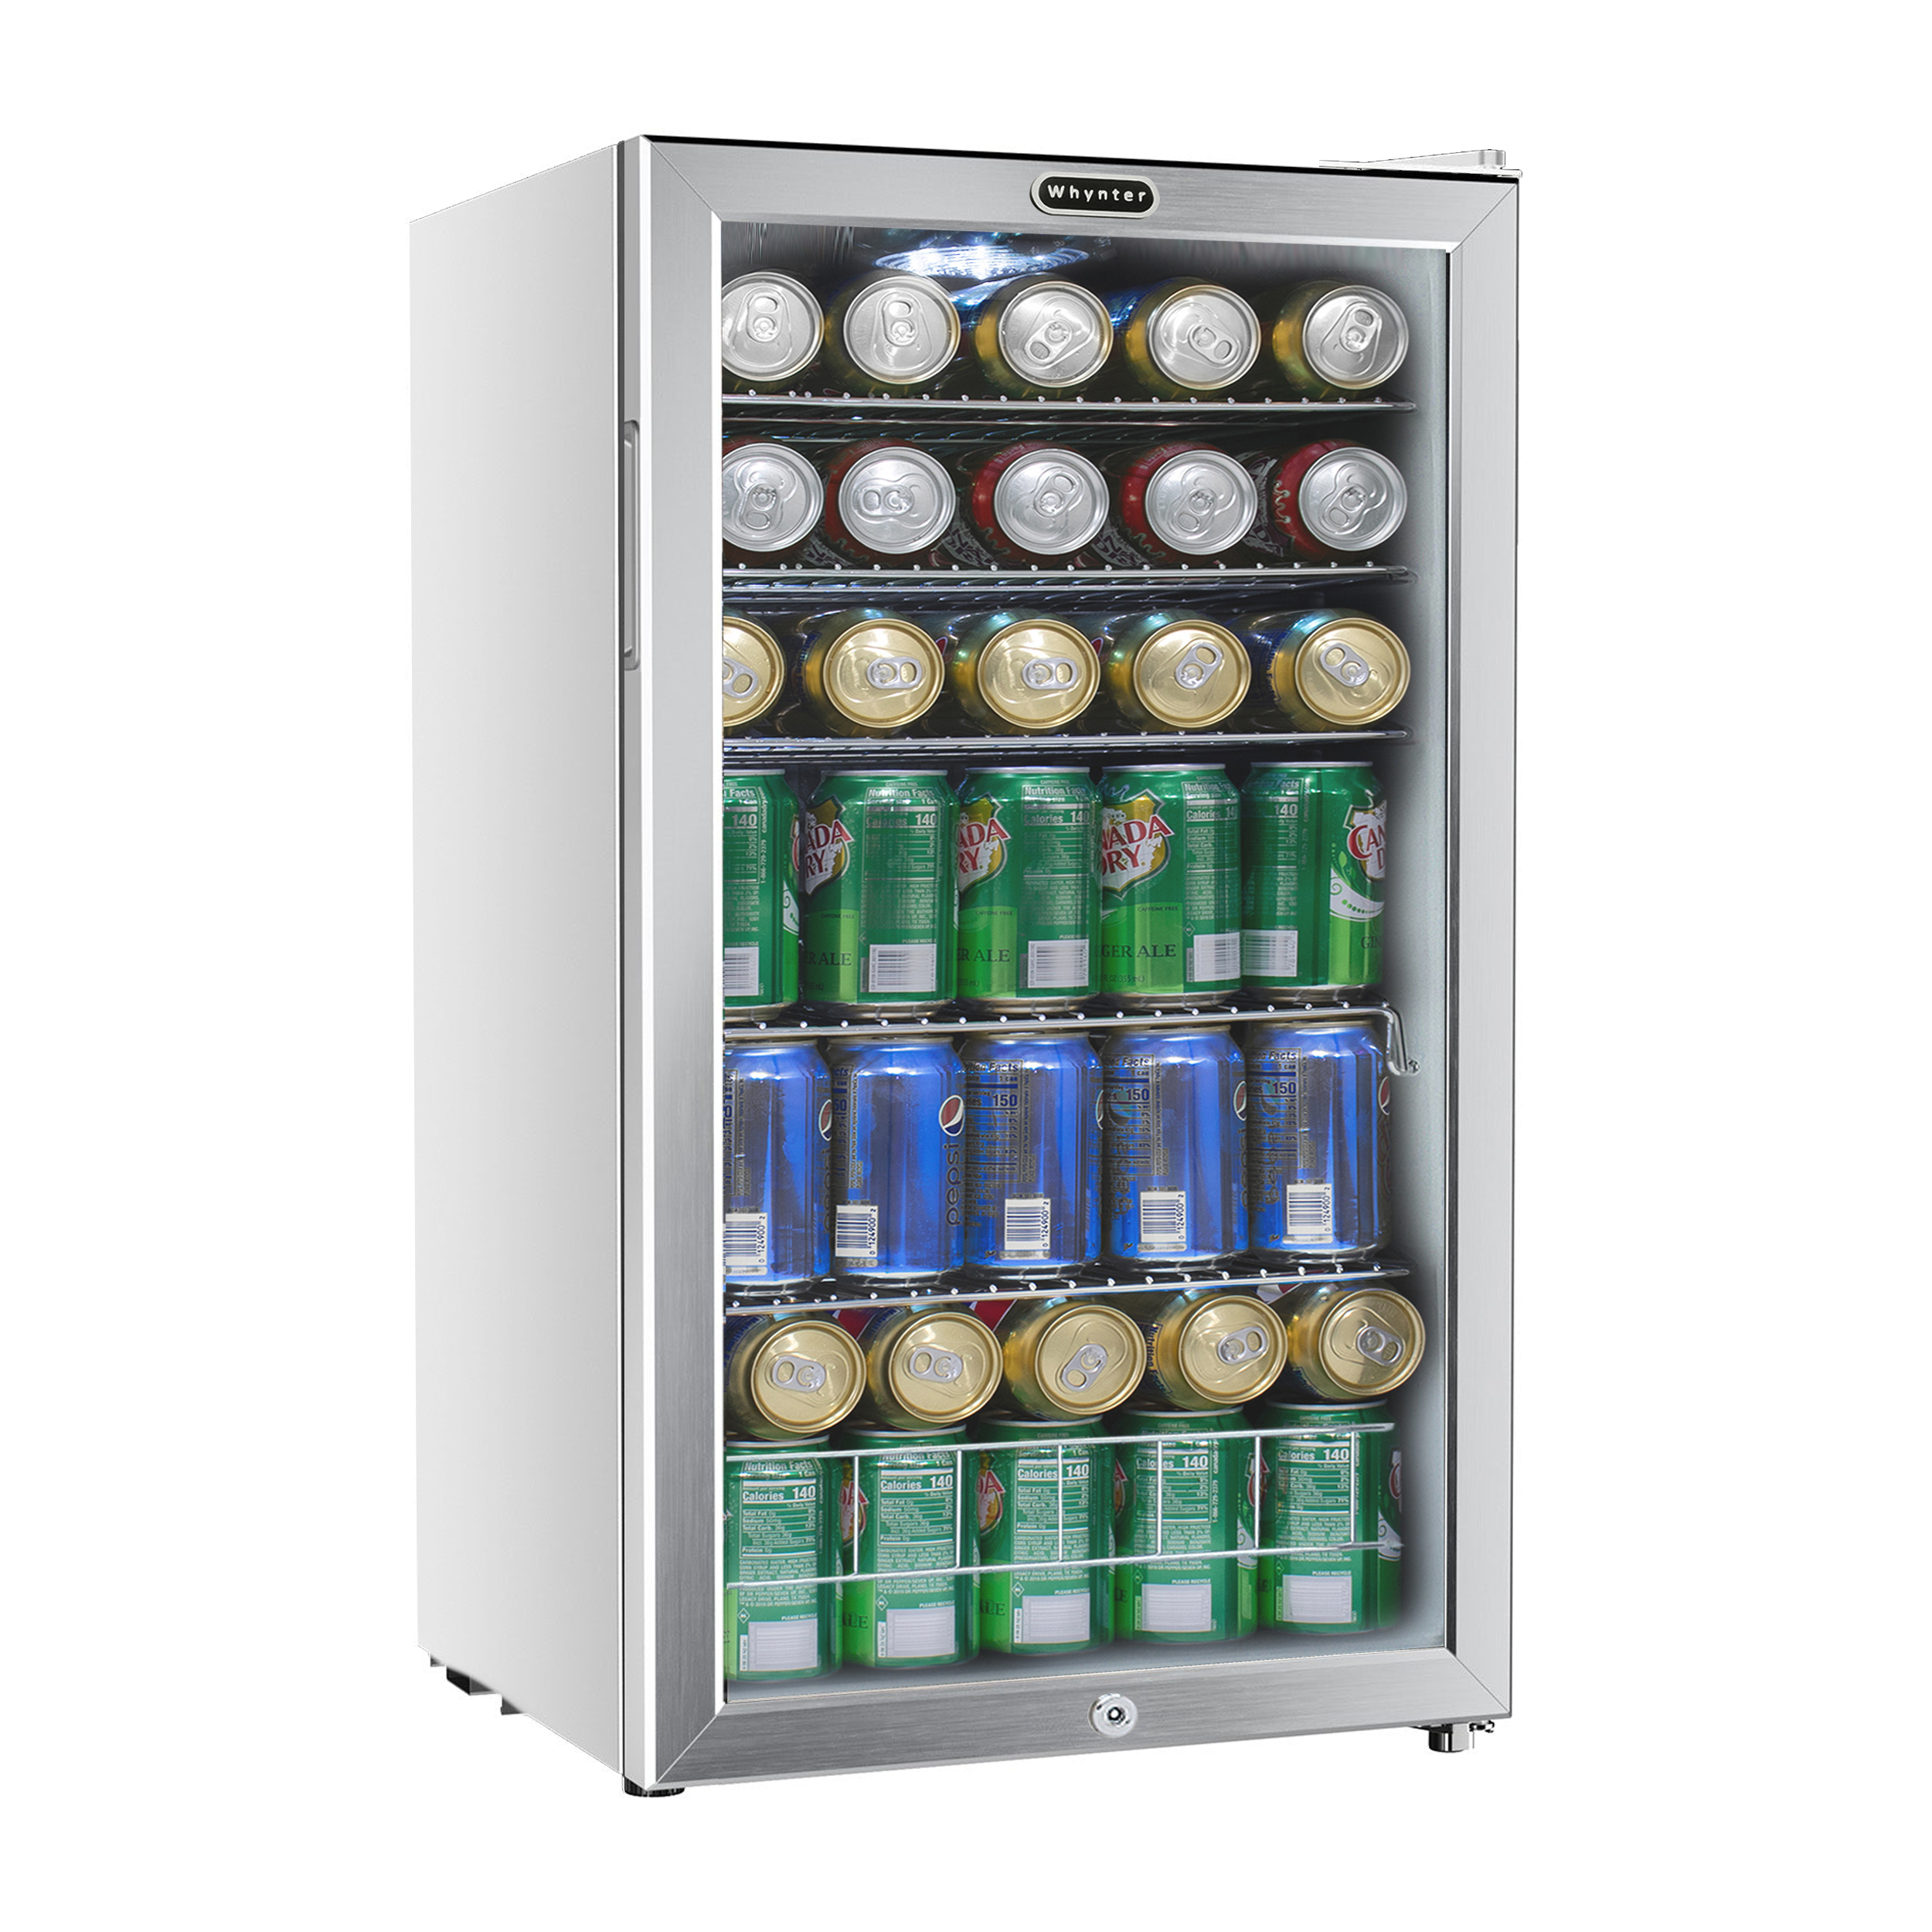 2 Quart Refrigerator Bottle